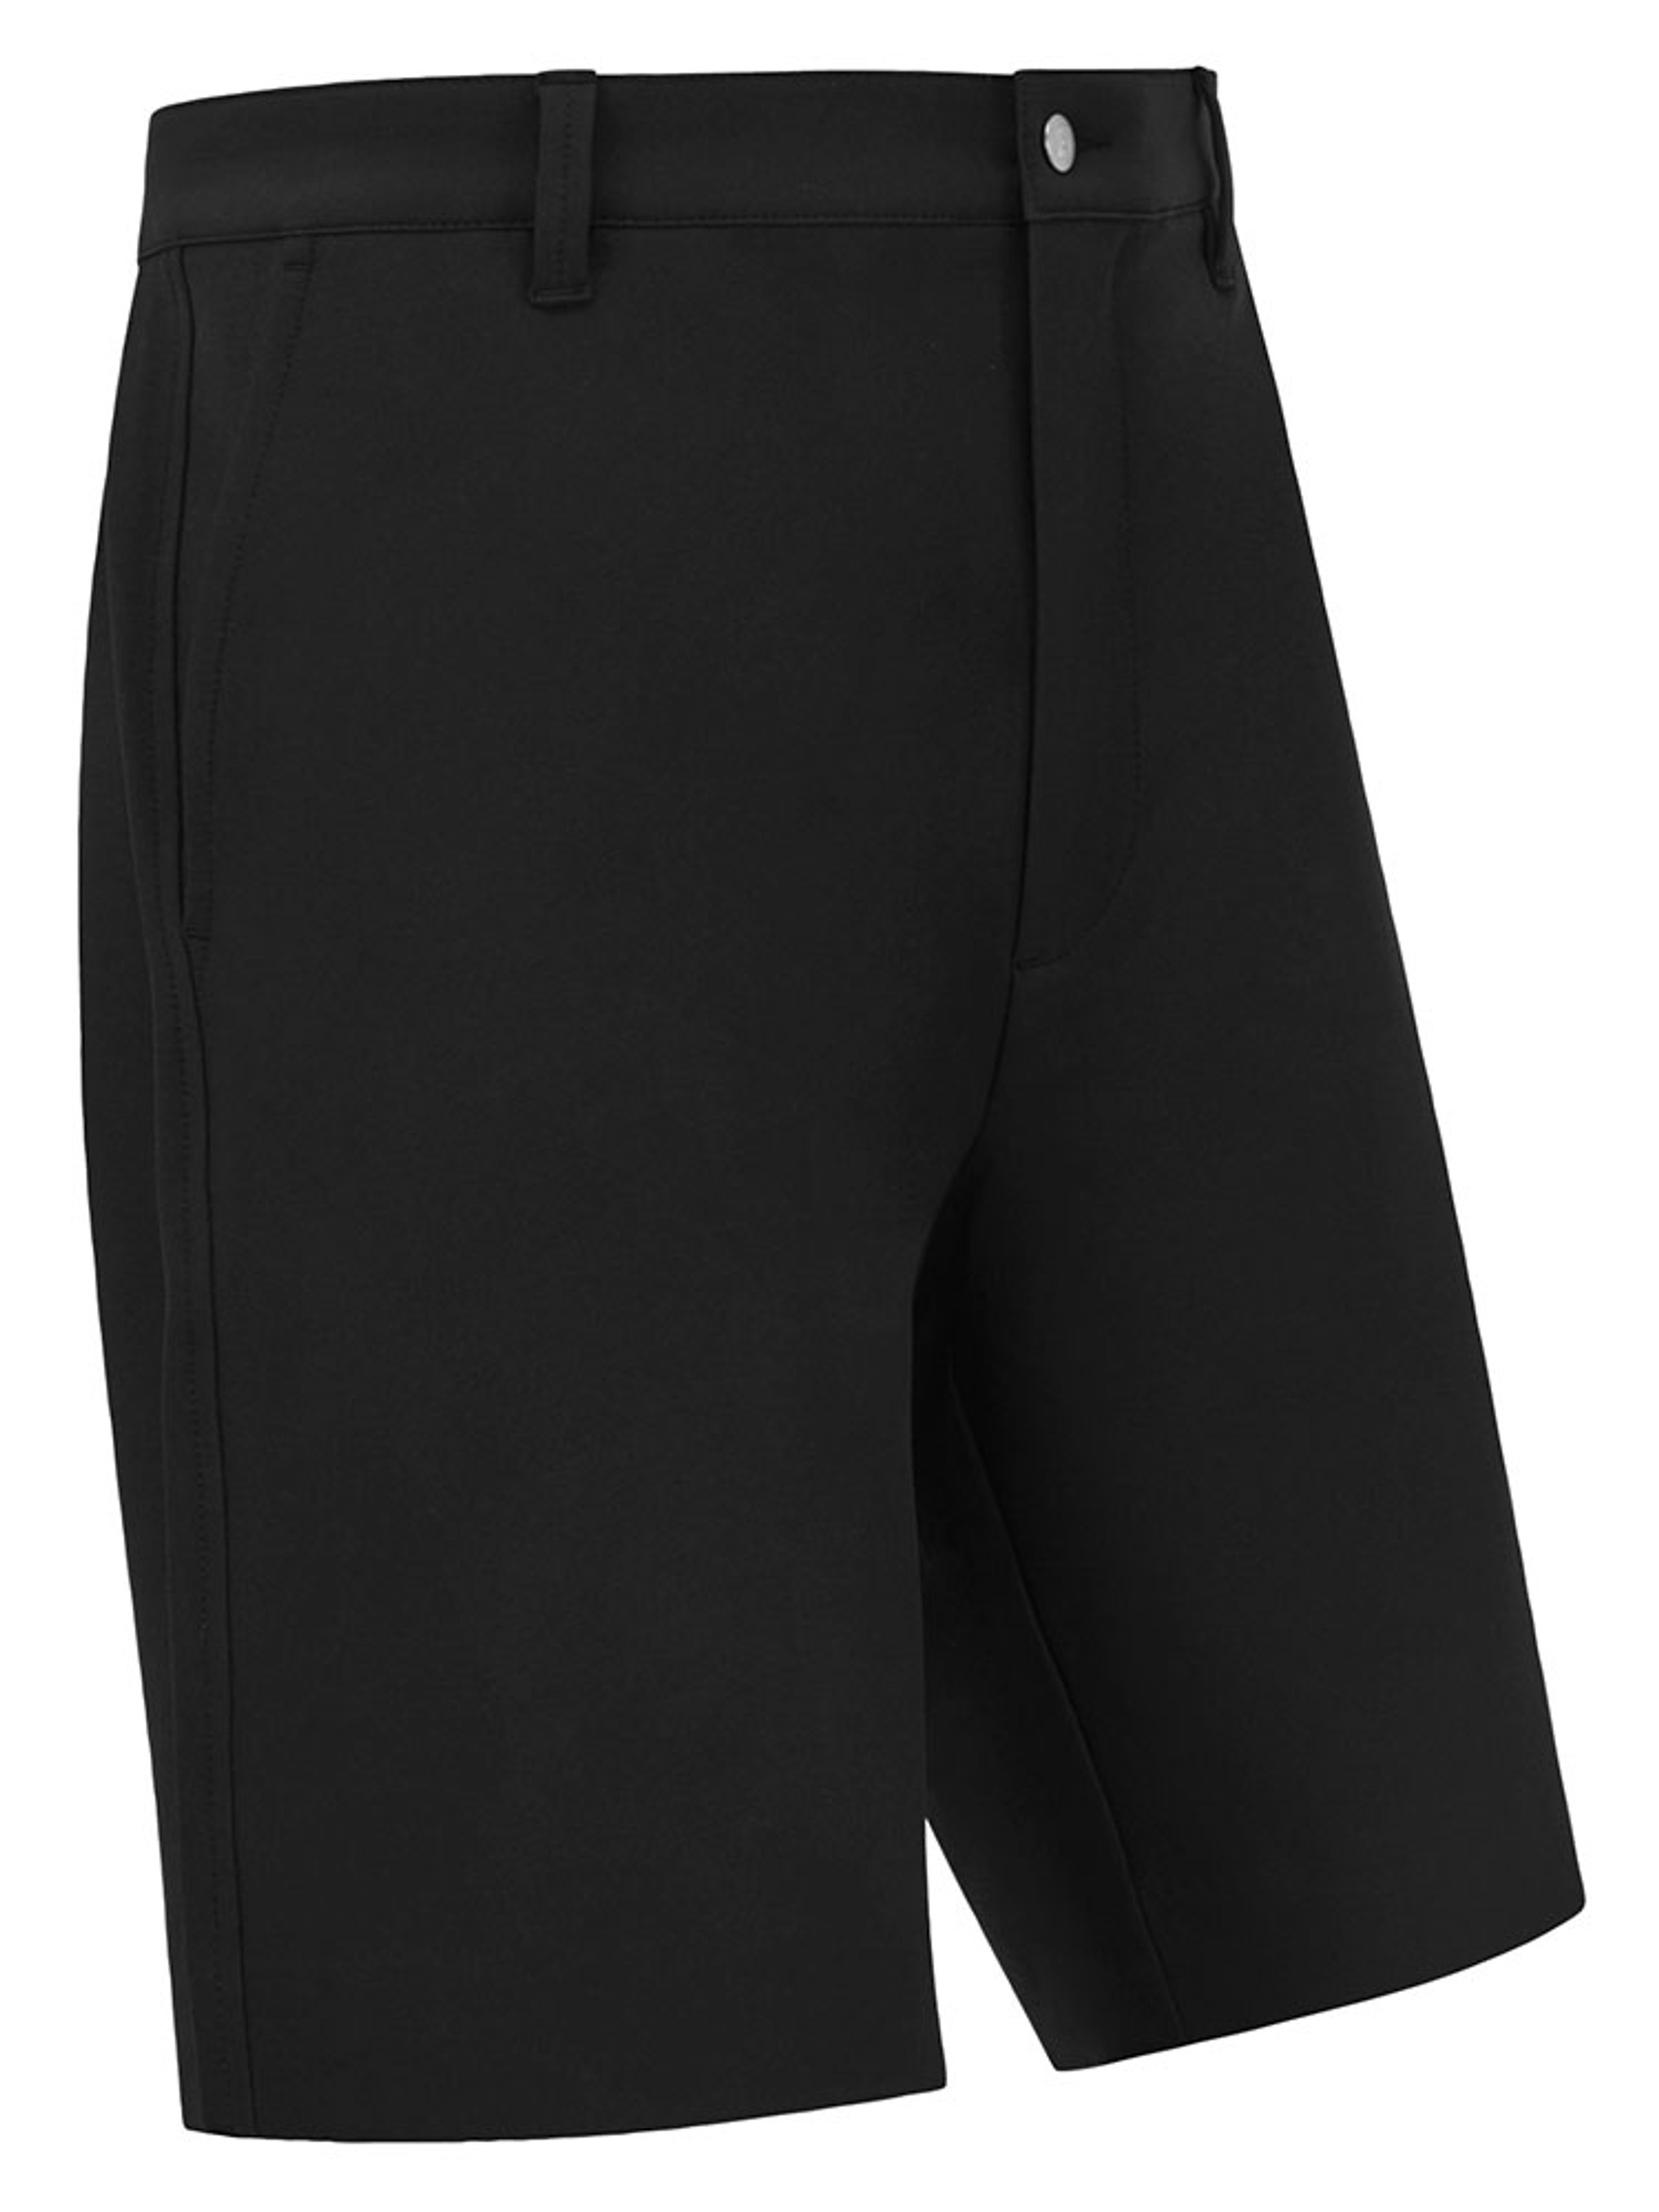 FootJoy Performance Shorts - Black | GolfBox